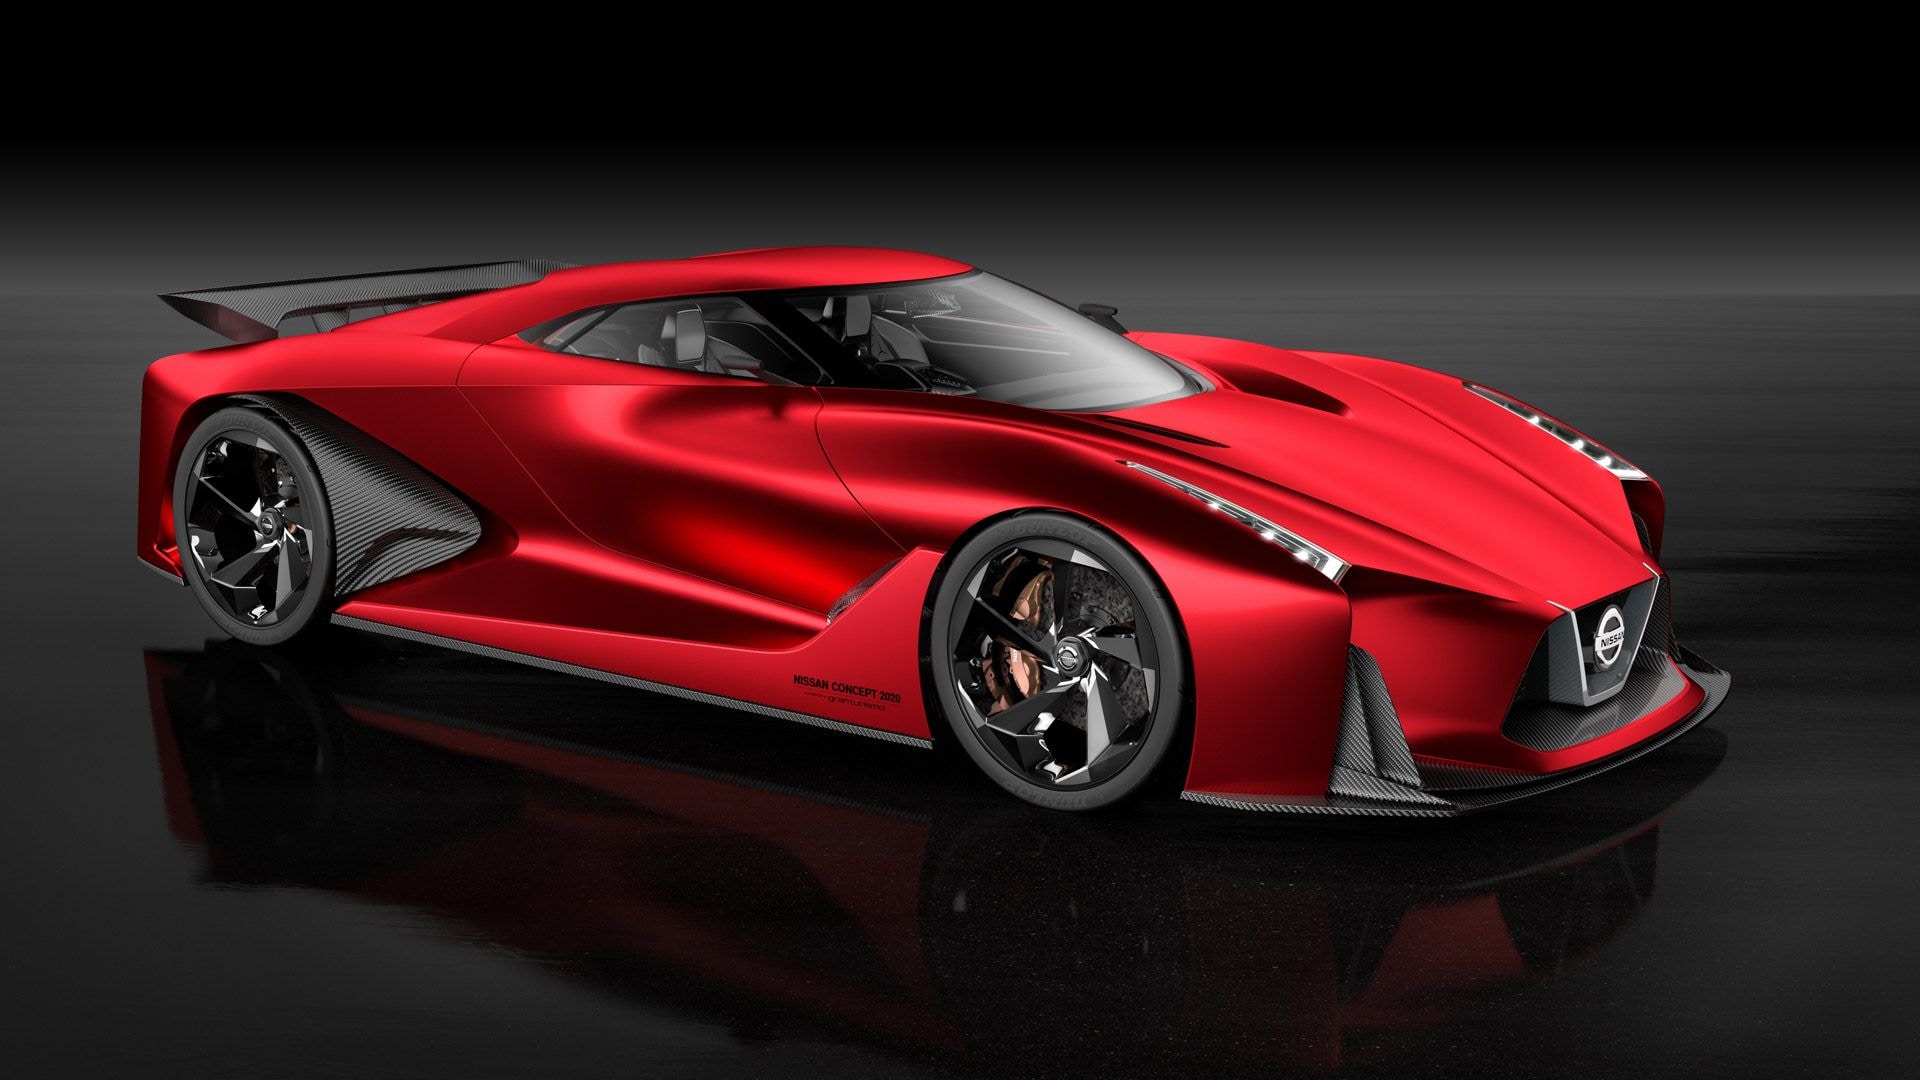 Nissan Concept 2020 Vision Gran Turismo, 2015 Tokyo Motor Show